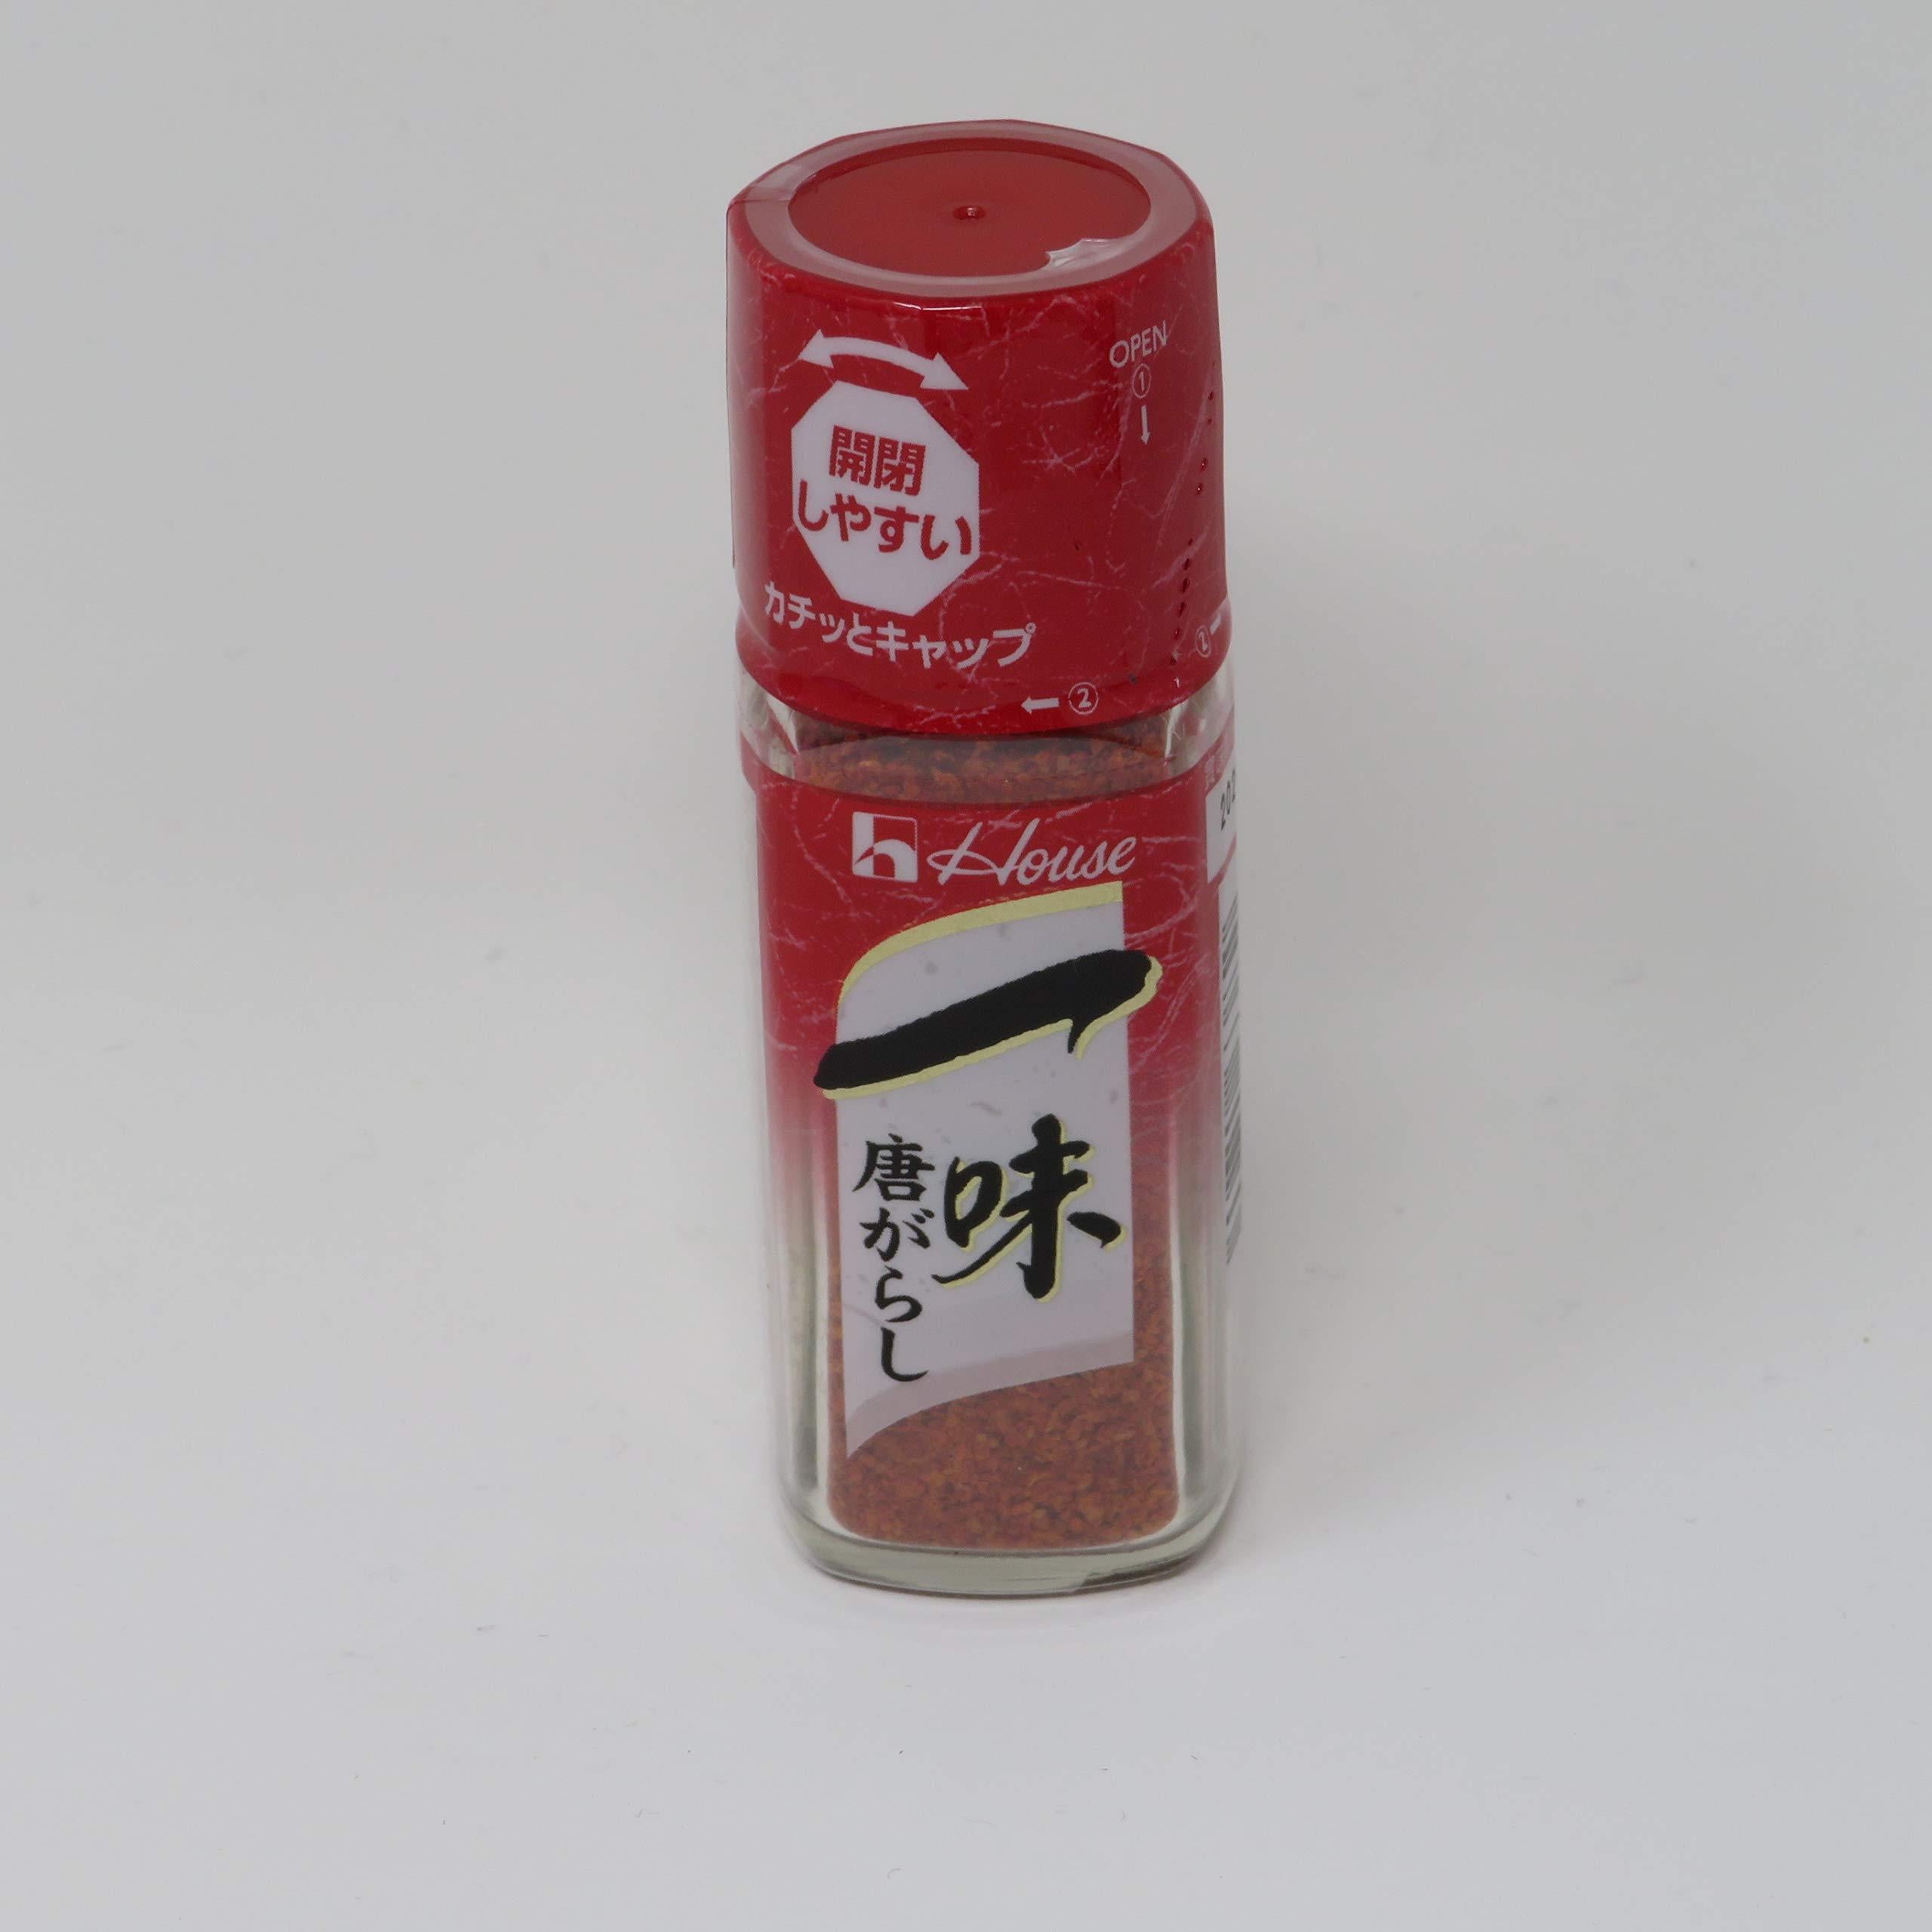 Ichimi Togarashi (red pepper flakes) 0.56 Oz(16g) Small bottle, Japanese Spice